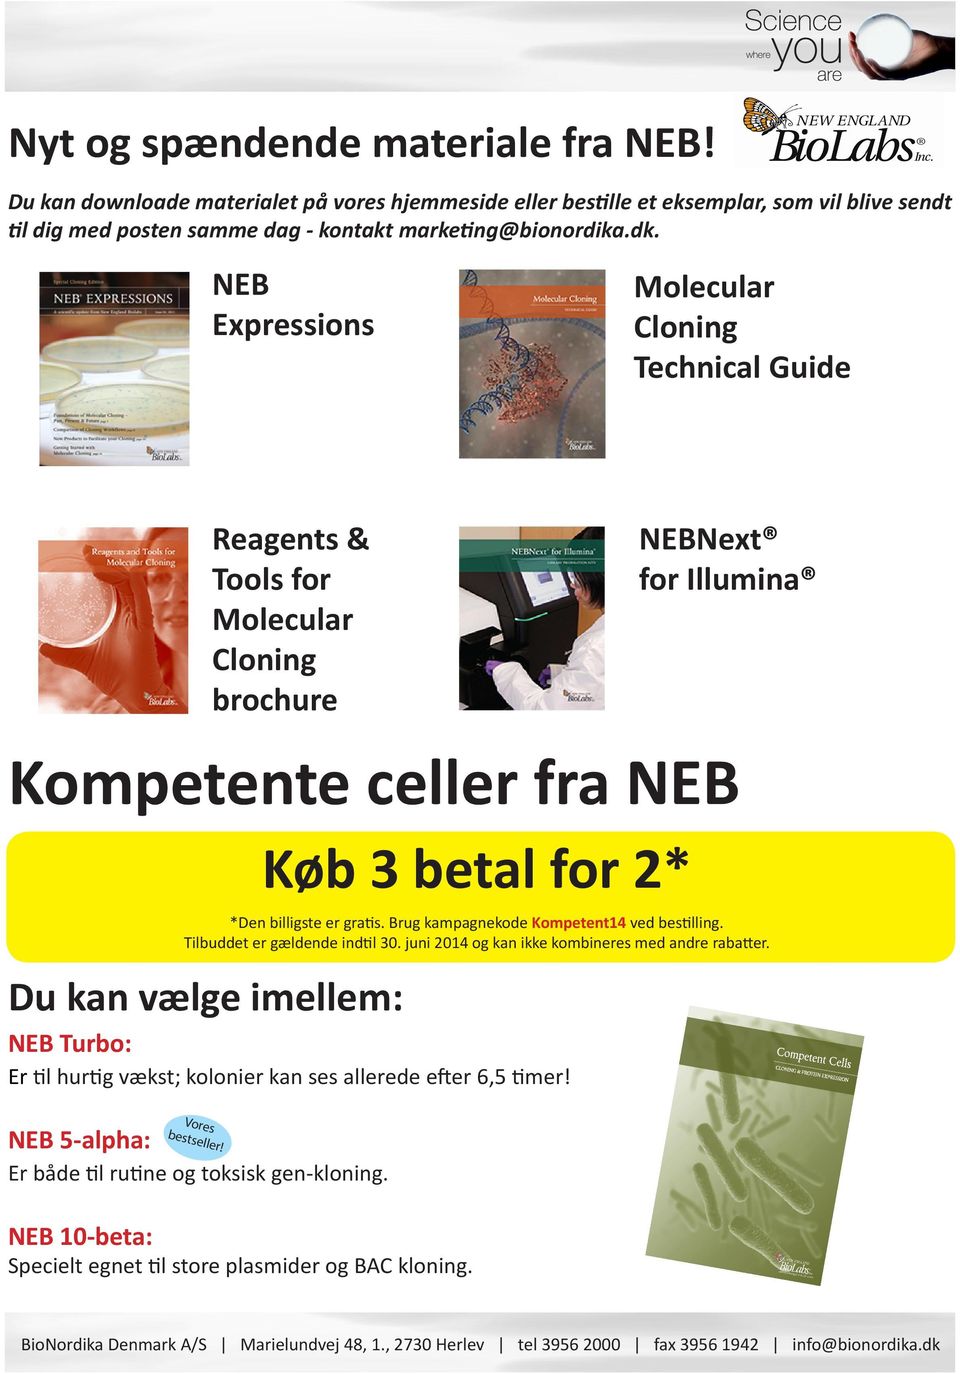 NEB Expressions Molecular Cloning Technical Guide Reagents & Tools for Molecular Cloning brochure NEBNext for Illumina Kompetente celler fra NEB Du kan vælge imellem: Køb 3 betal for 2*